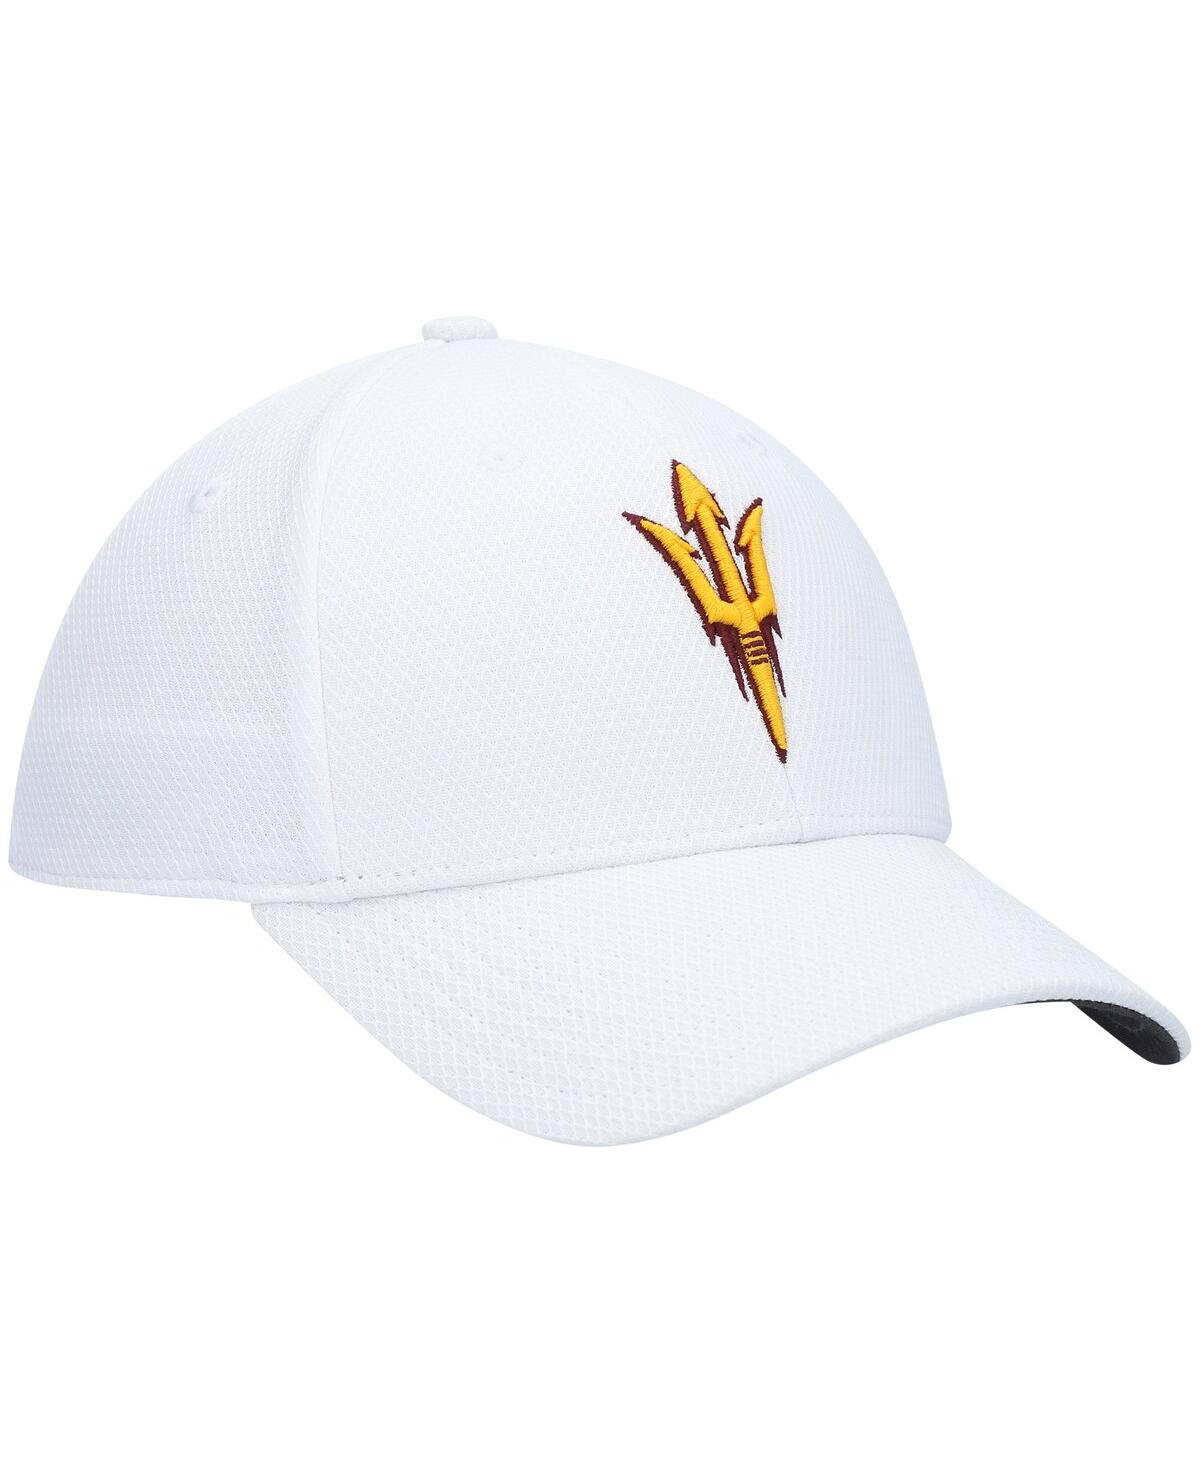 Shop Adidas Originals Men's Adidas White Arizona State Sun Devils 2021 Sideline Coaches Aeroready Flex Hat